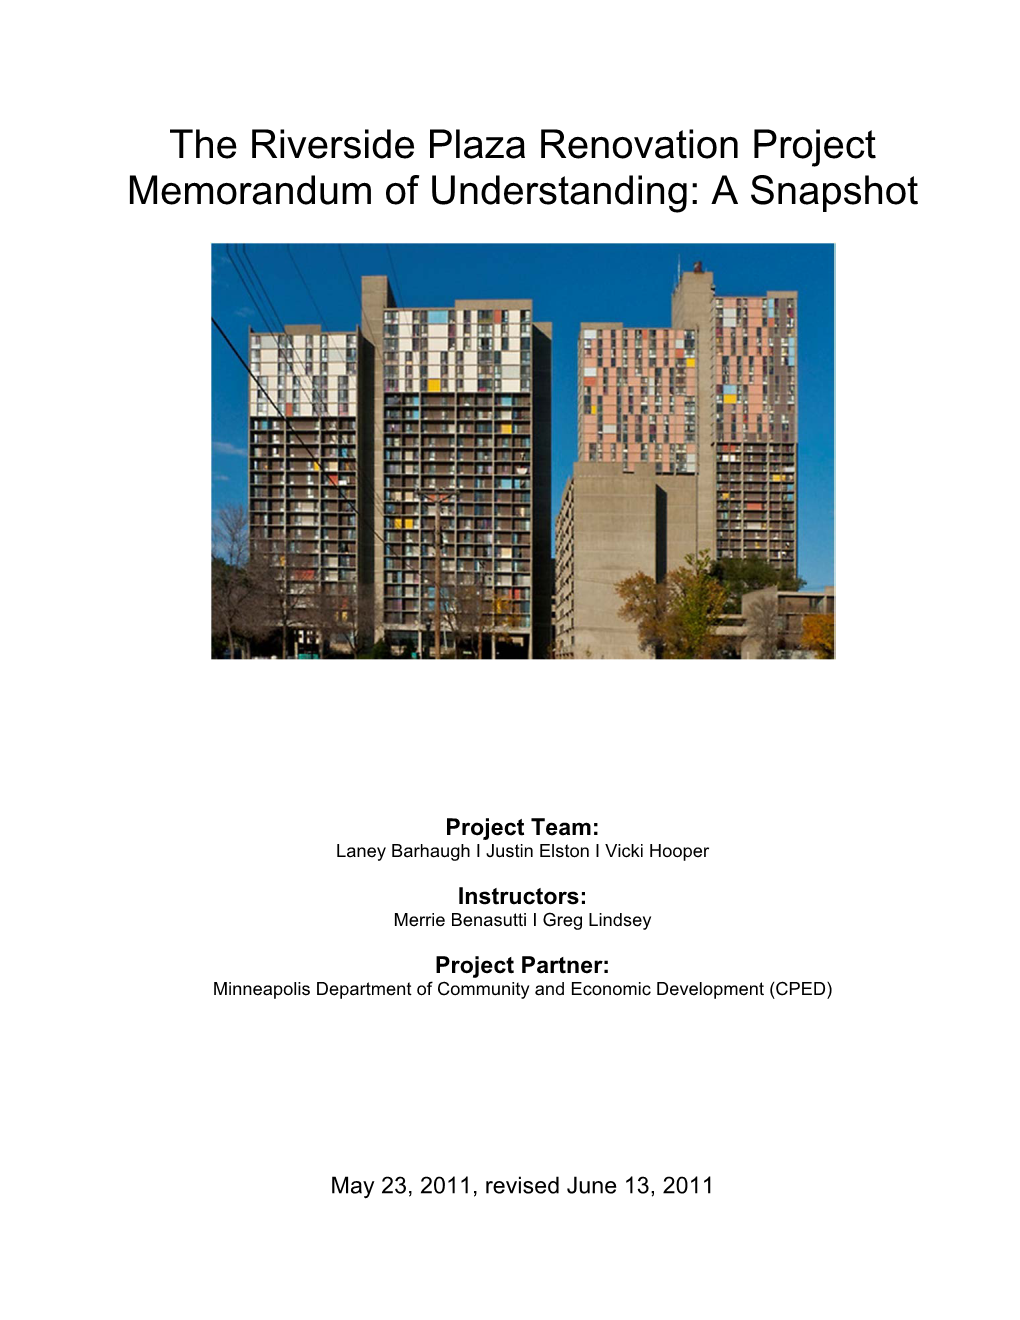 The Riverside Plaza Renovation Project Memorandum of Understanding: a Snapshot